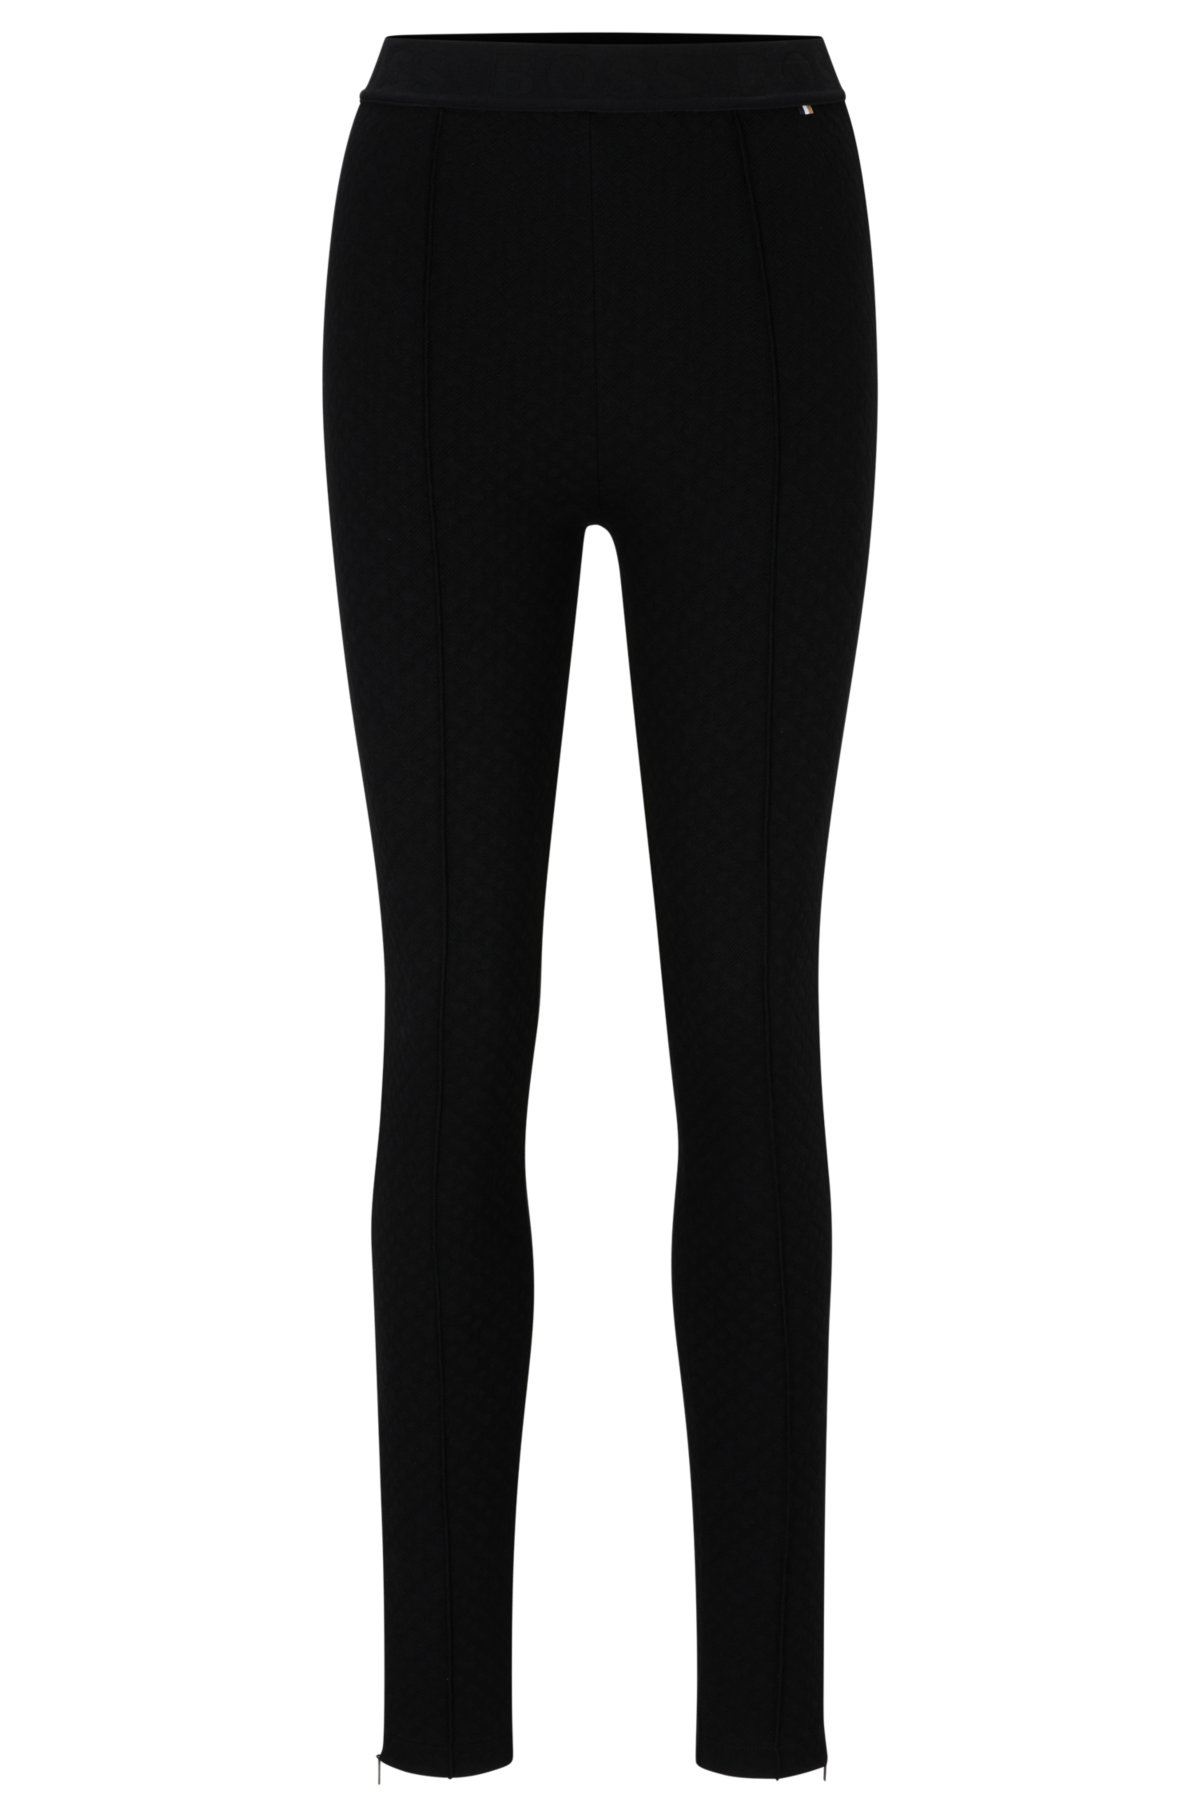 Balenciaga Stretch Stirrup Leggings in Black